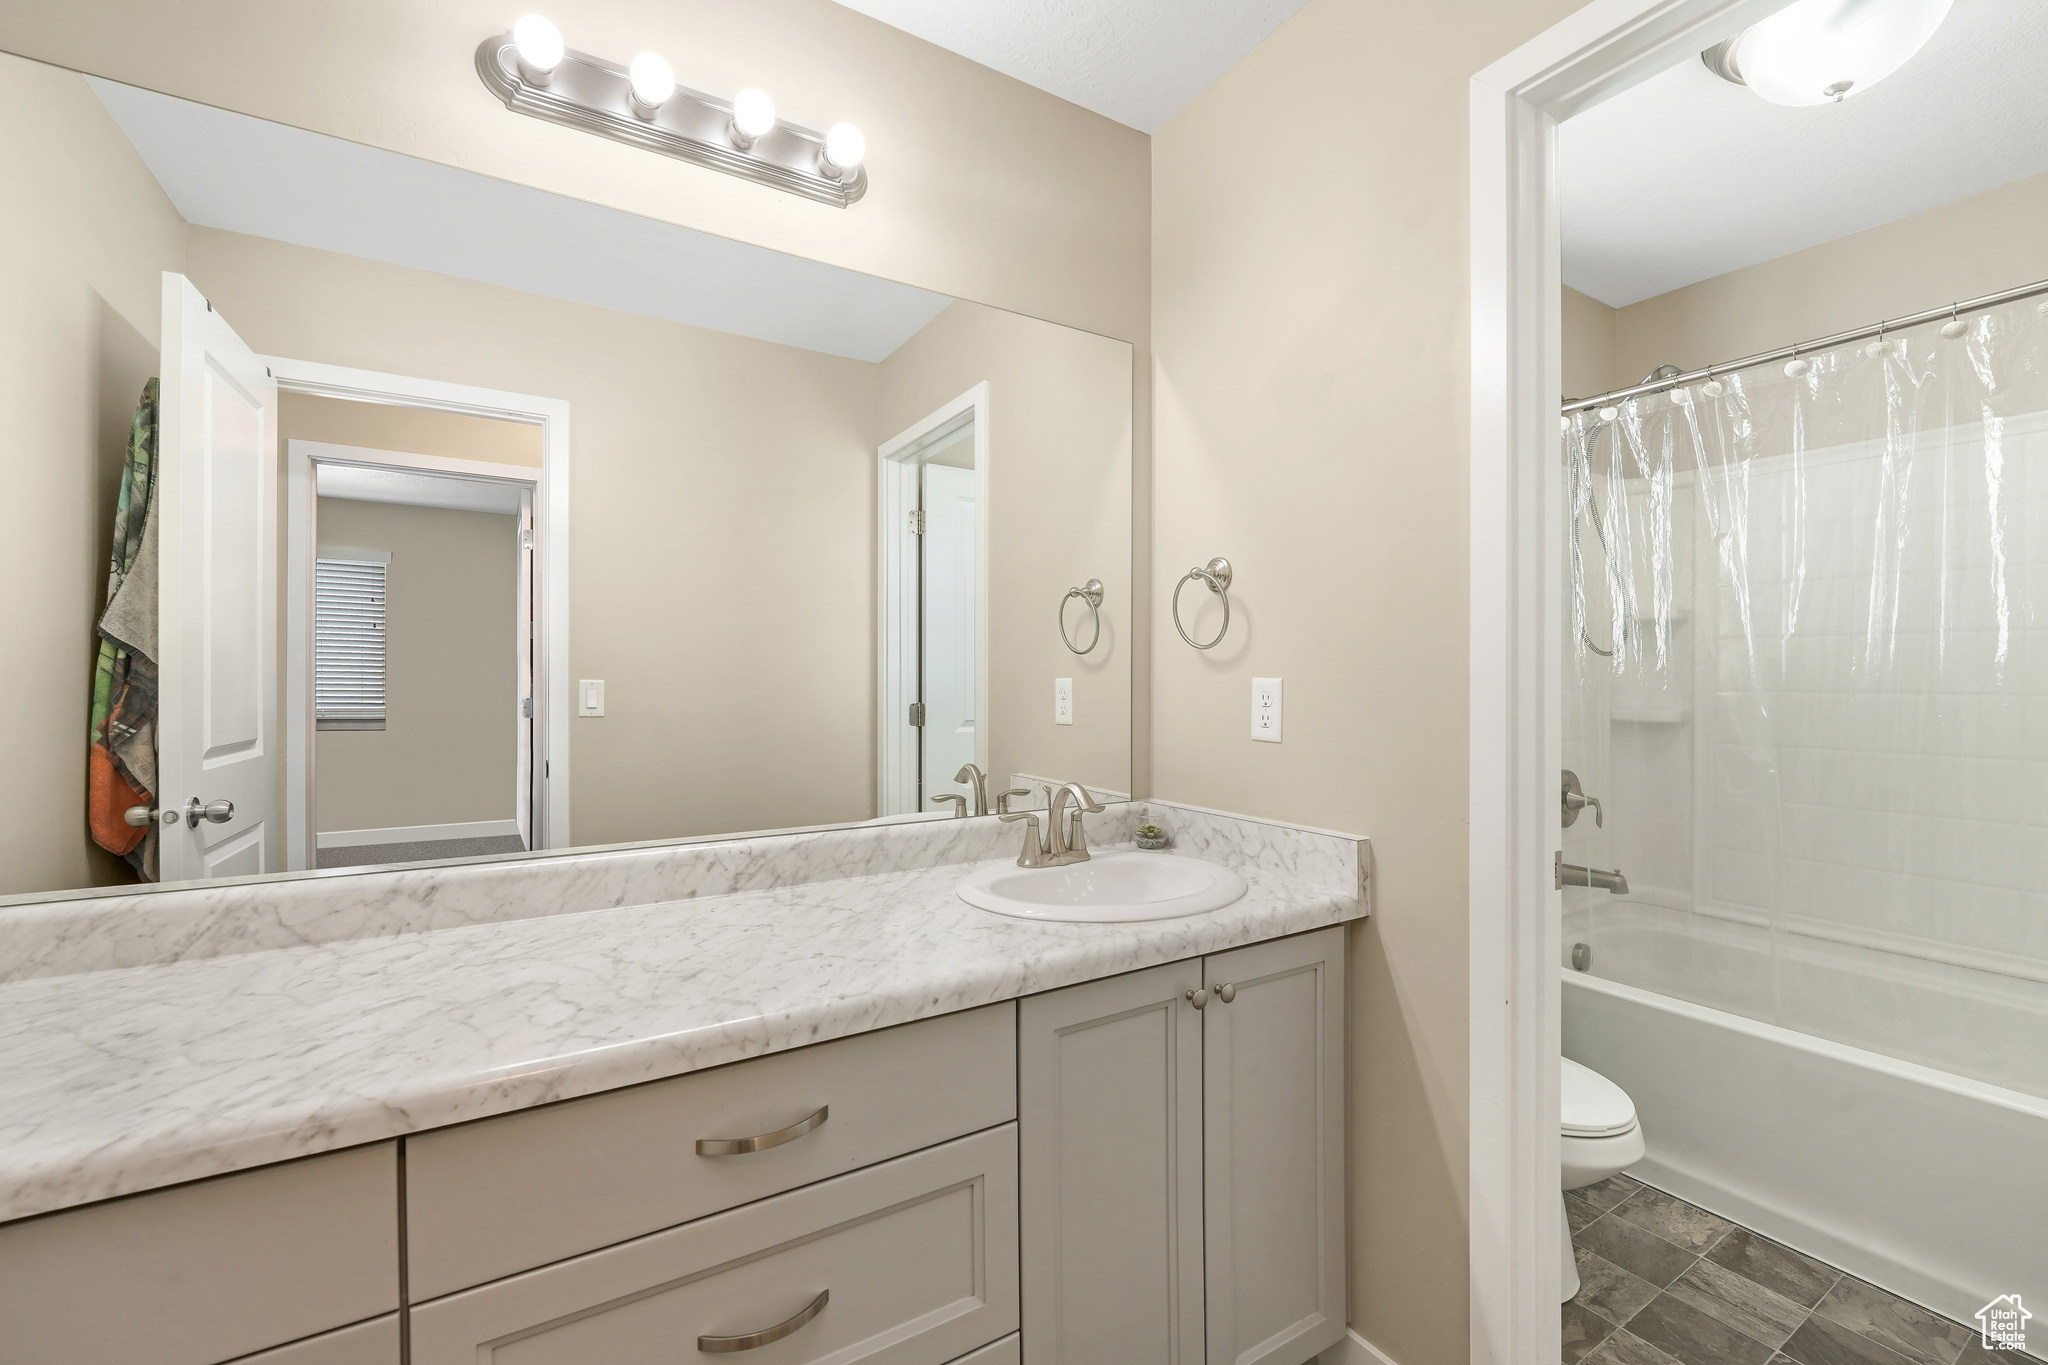 Full bathroom featuring shower / bath combo, toilet, tile floors, and vanity